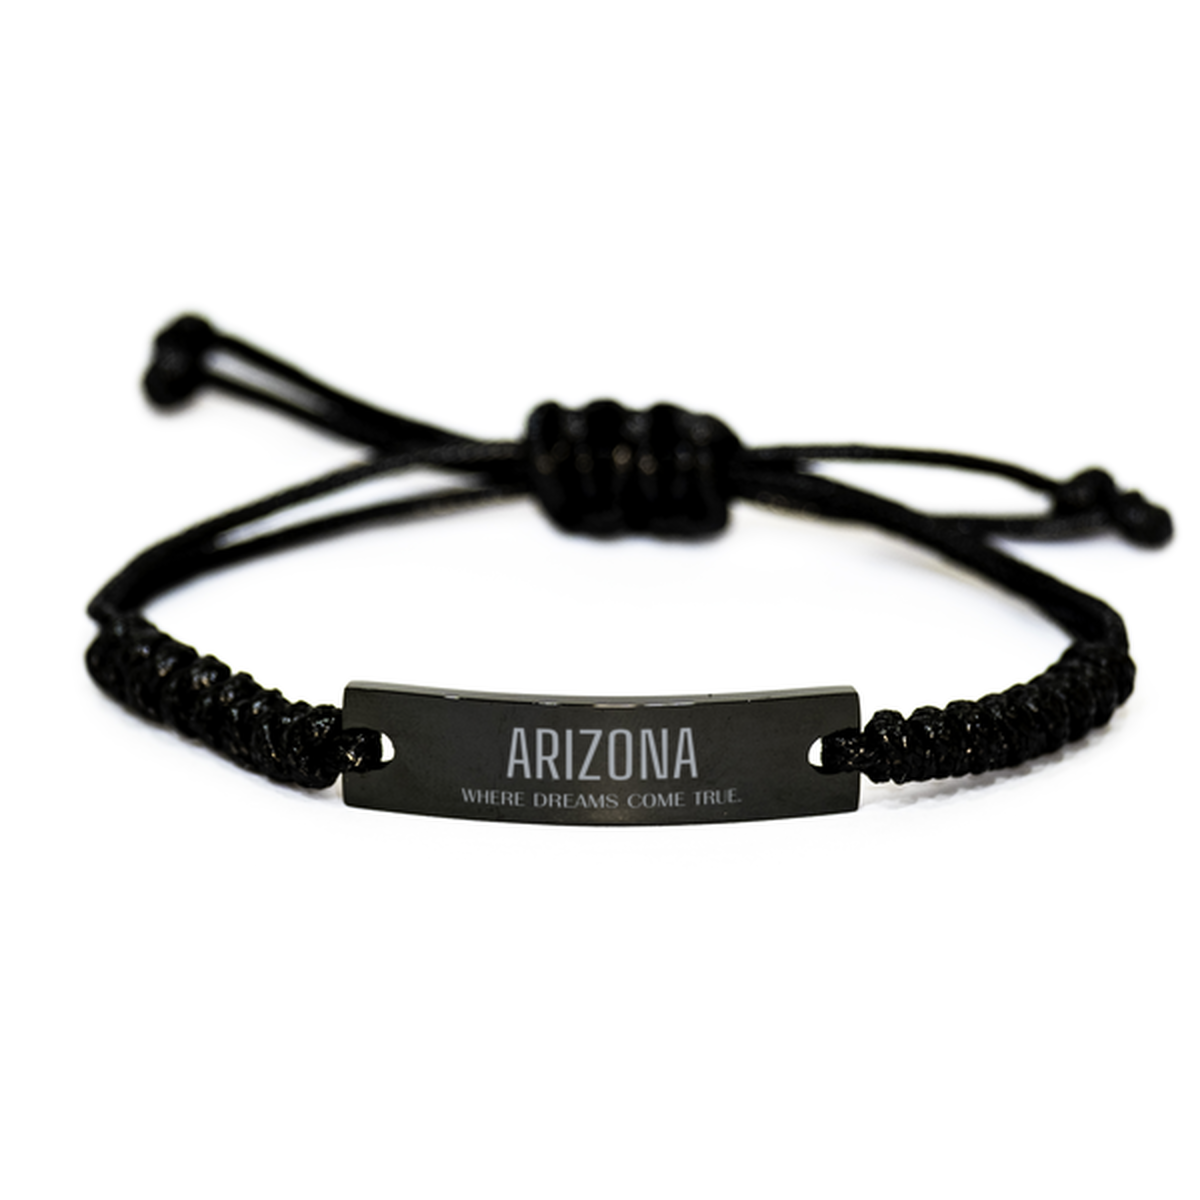 Love Arizona State Black Rope Bracelet, Arizona Where dreams come true, Birthday Inspirational Gifts For Arizona Men, Women, Friends